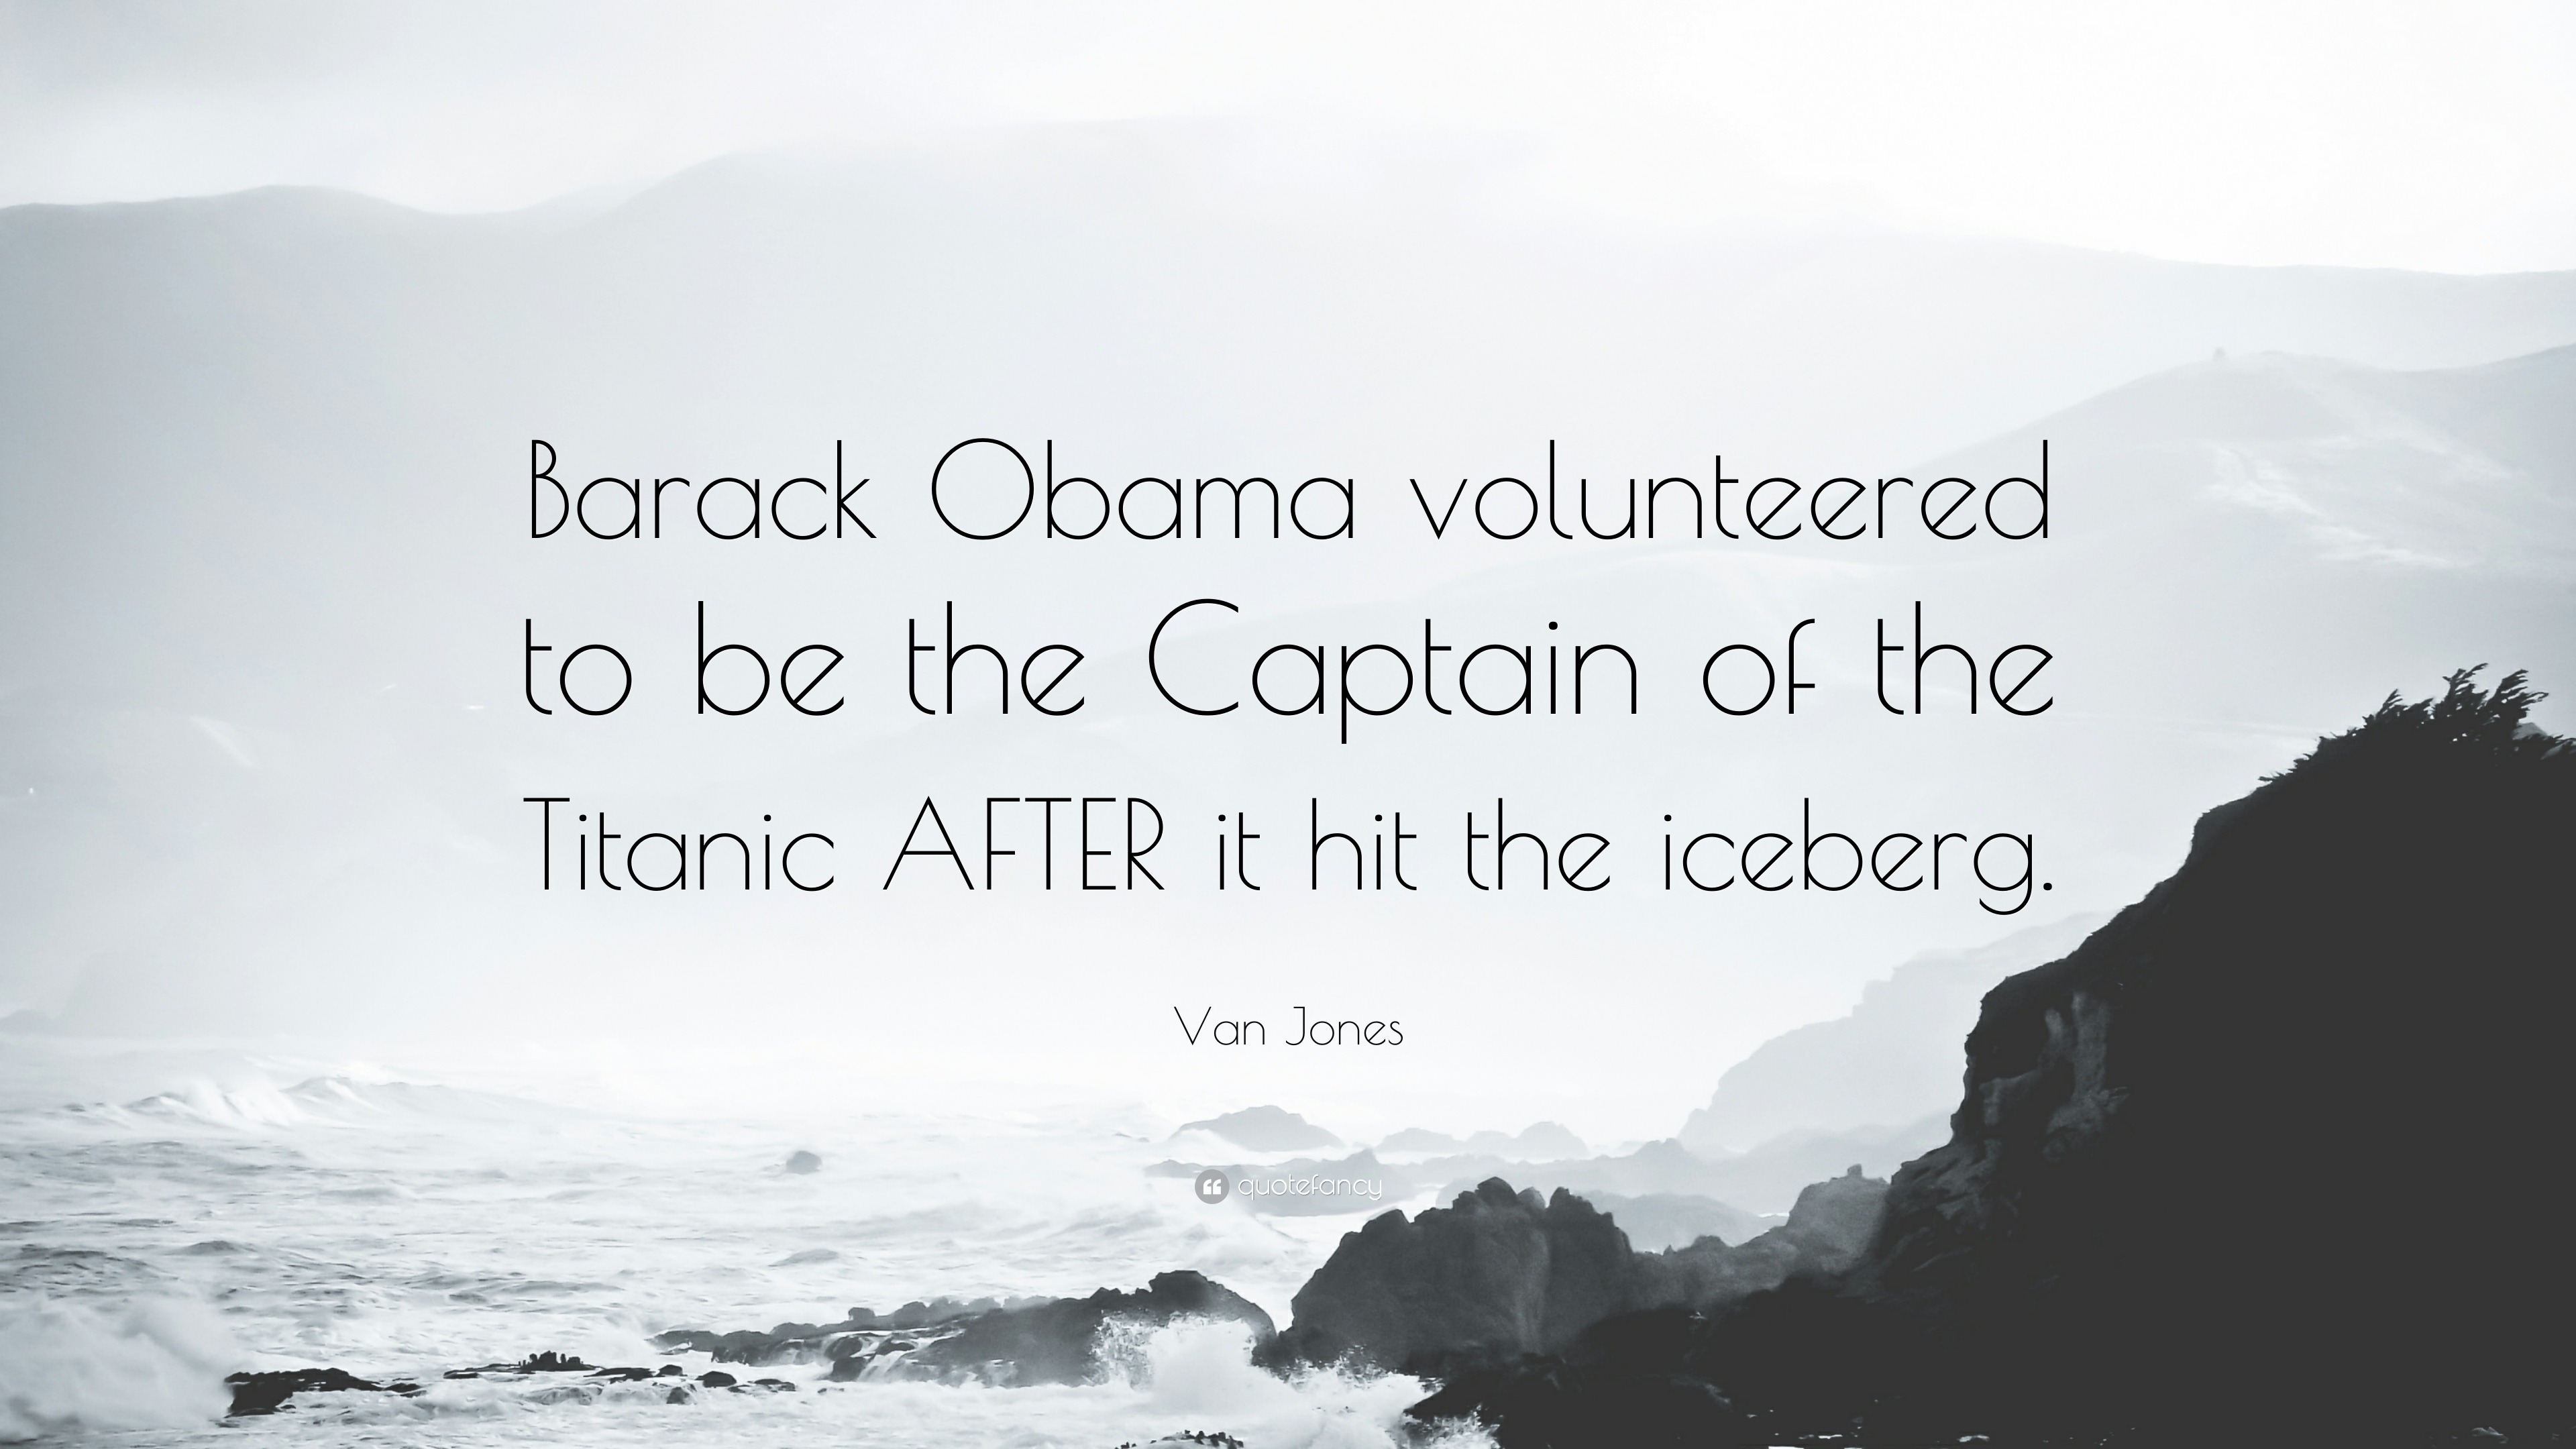 1209837 Van Jones Quote Barack Obama volunteered to be the Captain of the